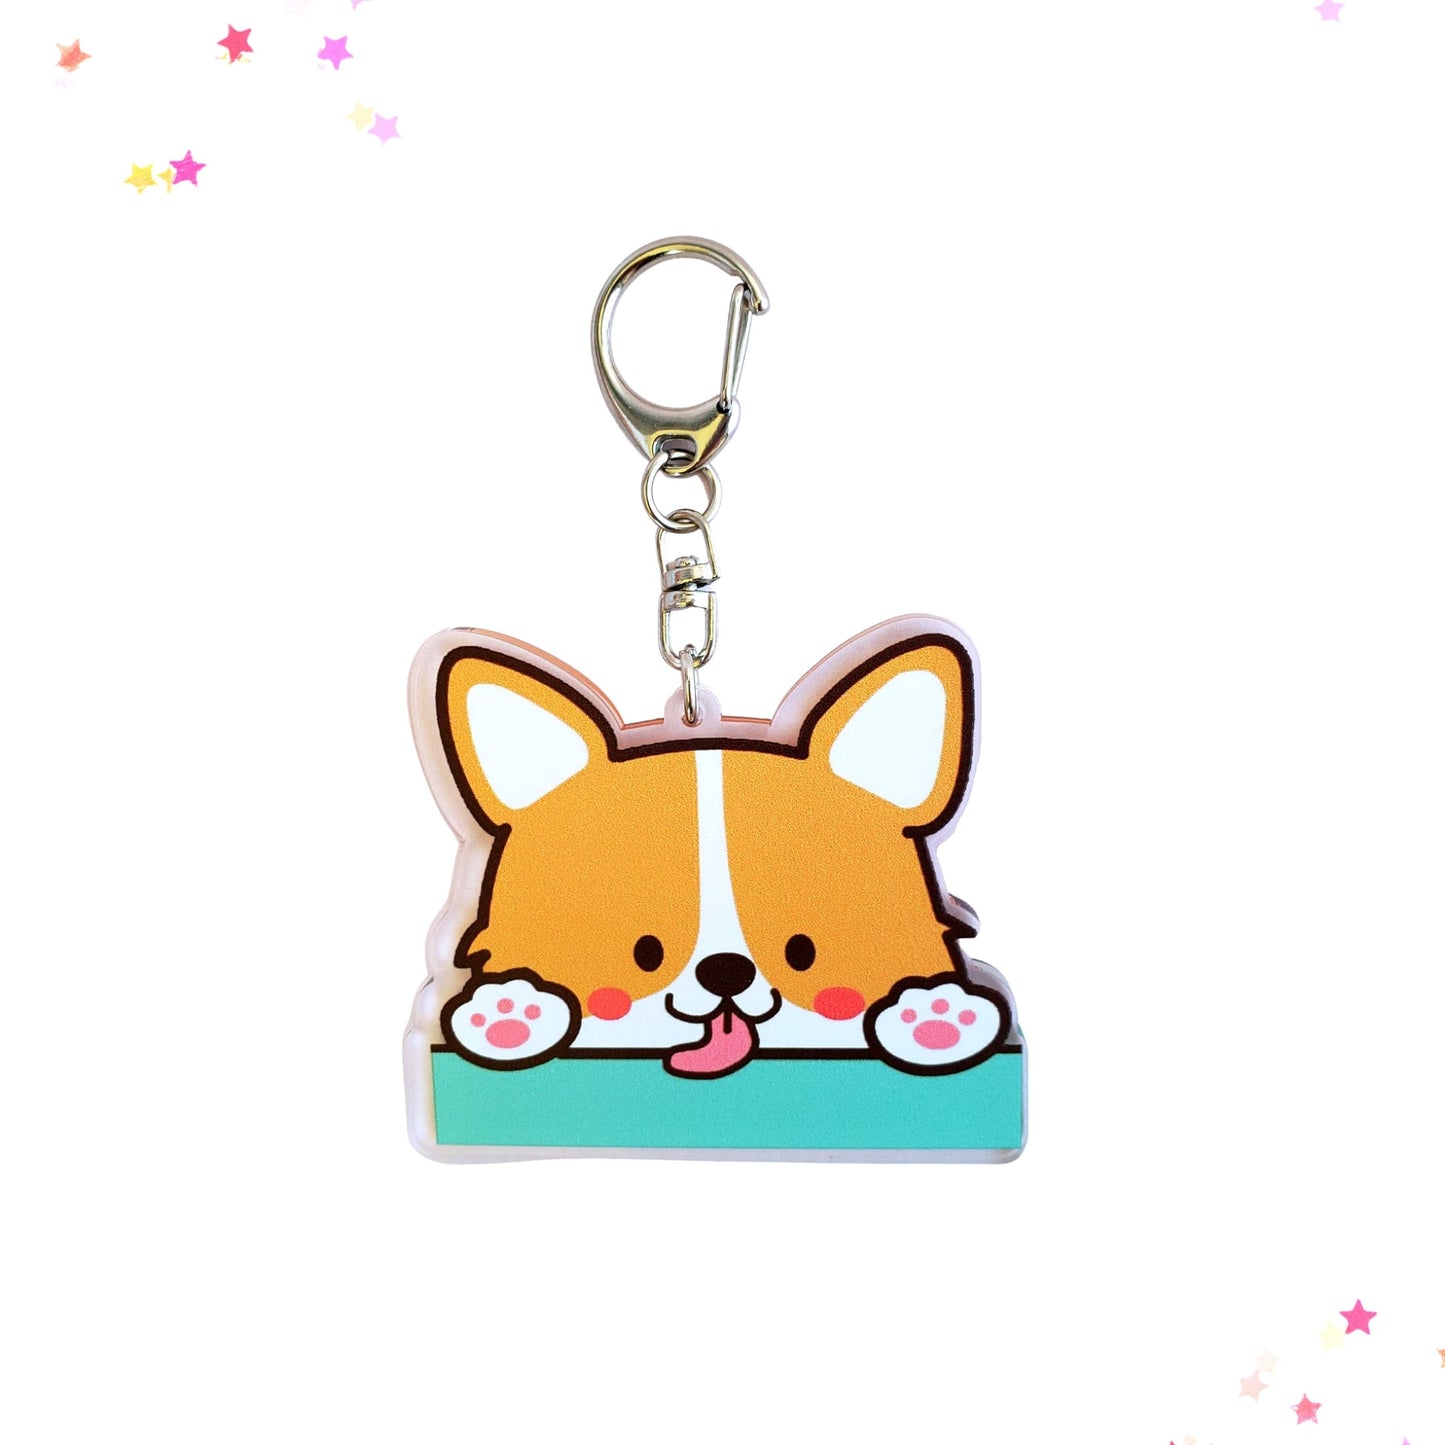 Corgi Dog Acrylic Keychain Bag Charm